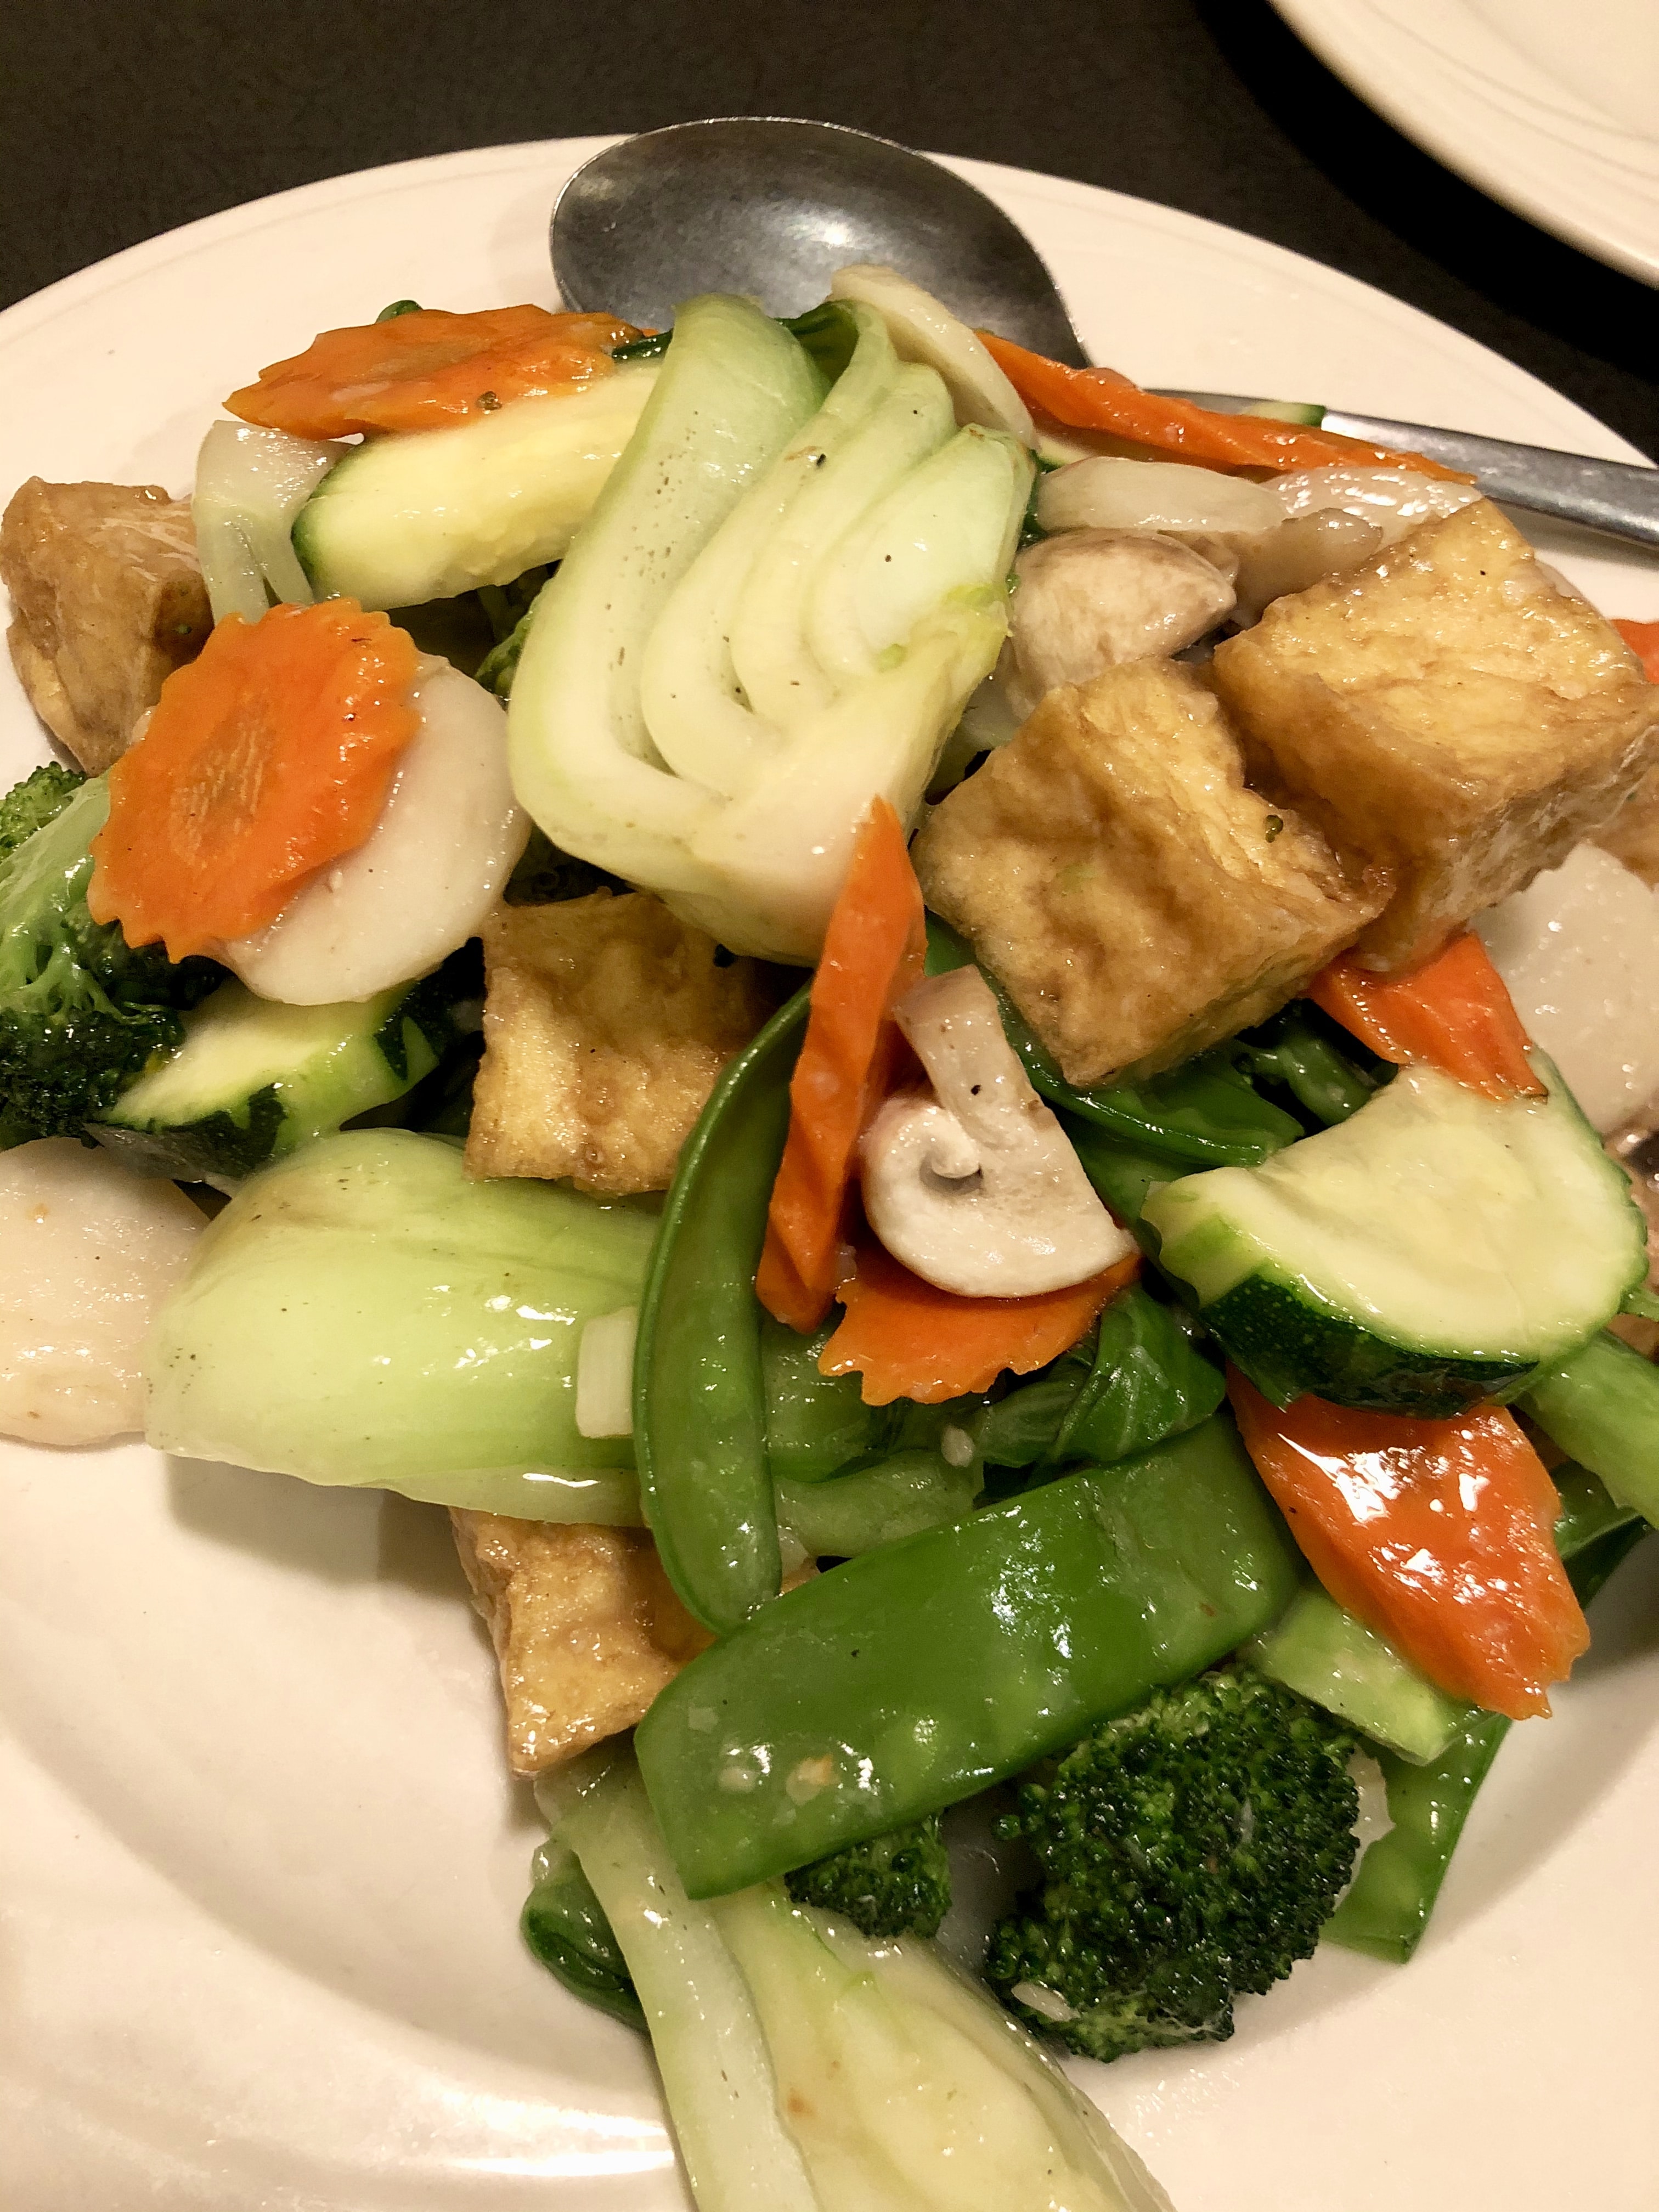 Mixed Vegetable and Tofu